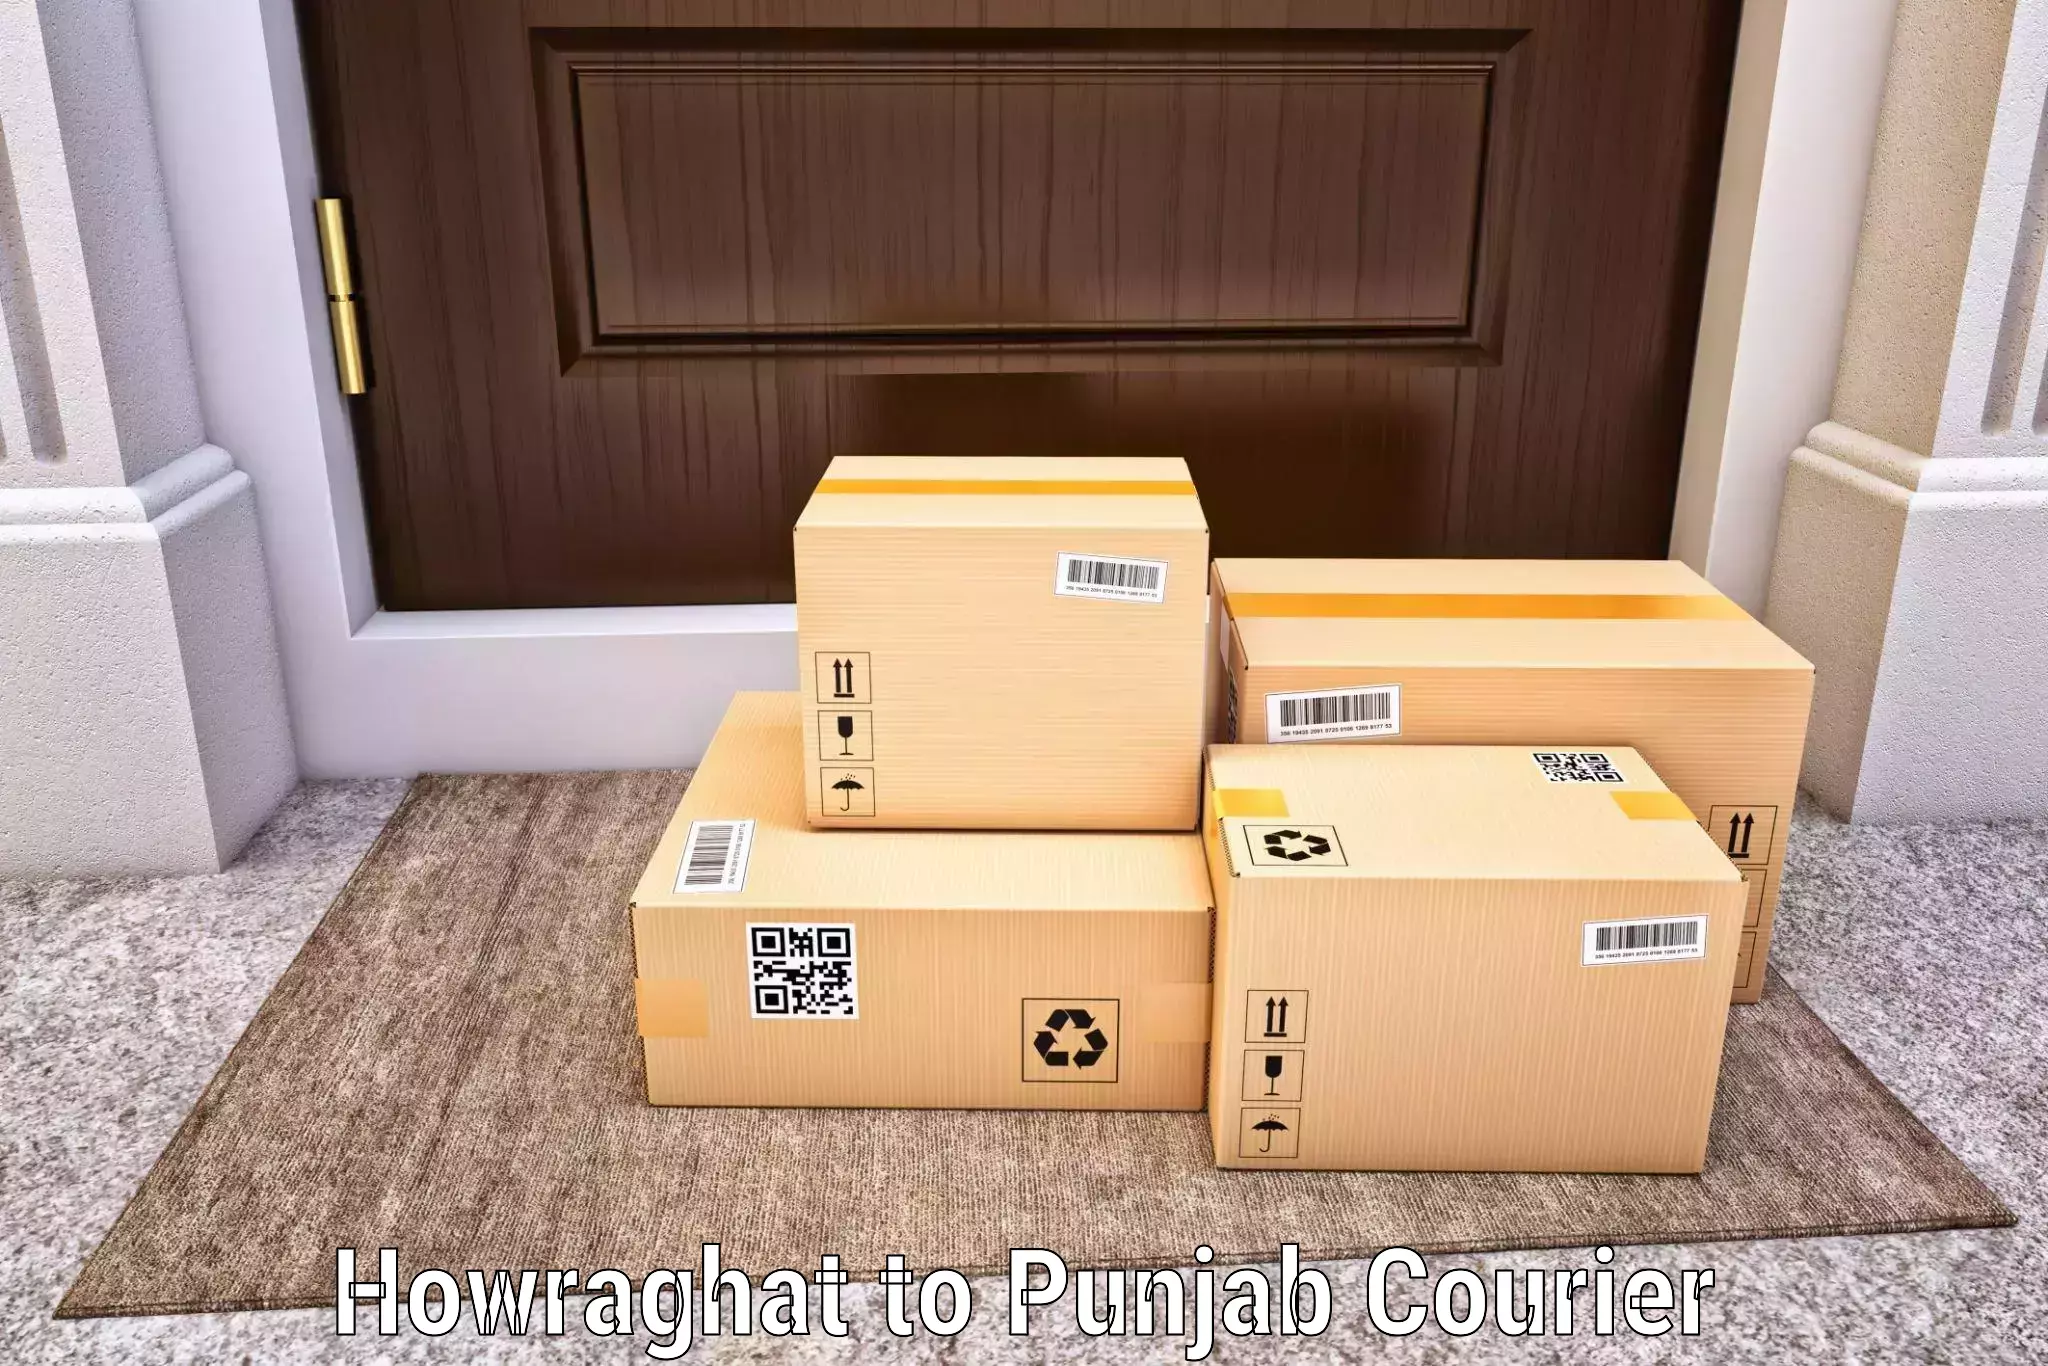 Express package handling Howraghat to Firozpur